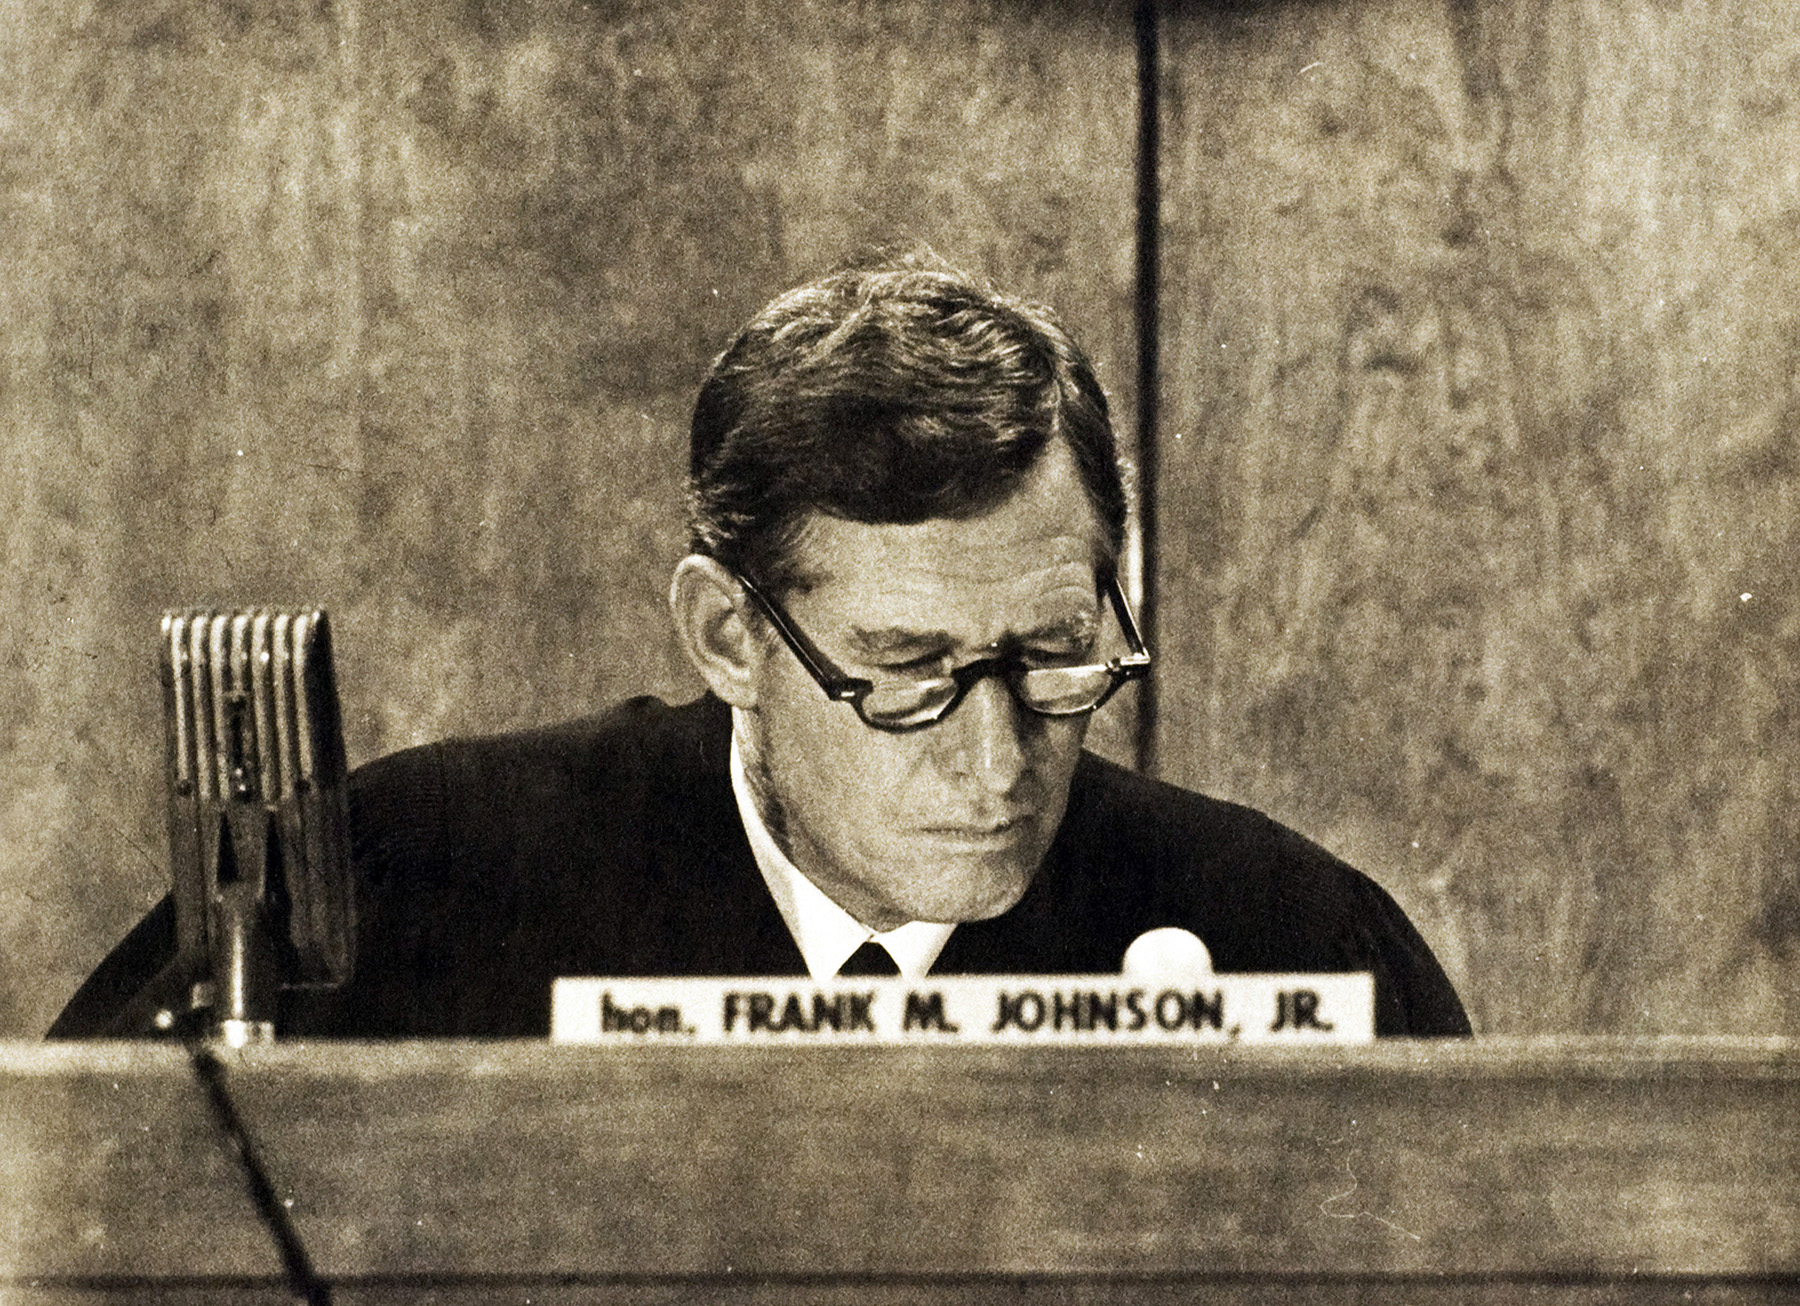 UA Law to Host Symposium Honoring Judge Frank M. Johnson Jr.